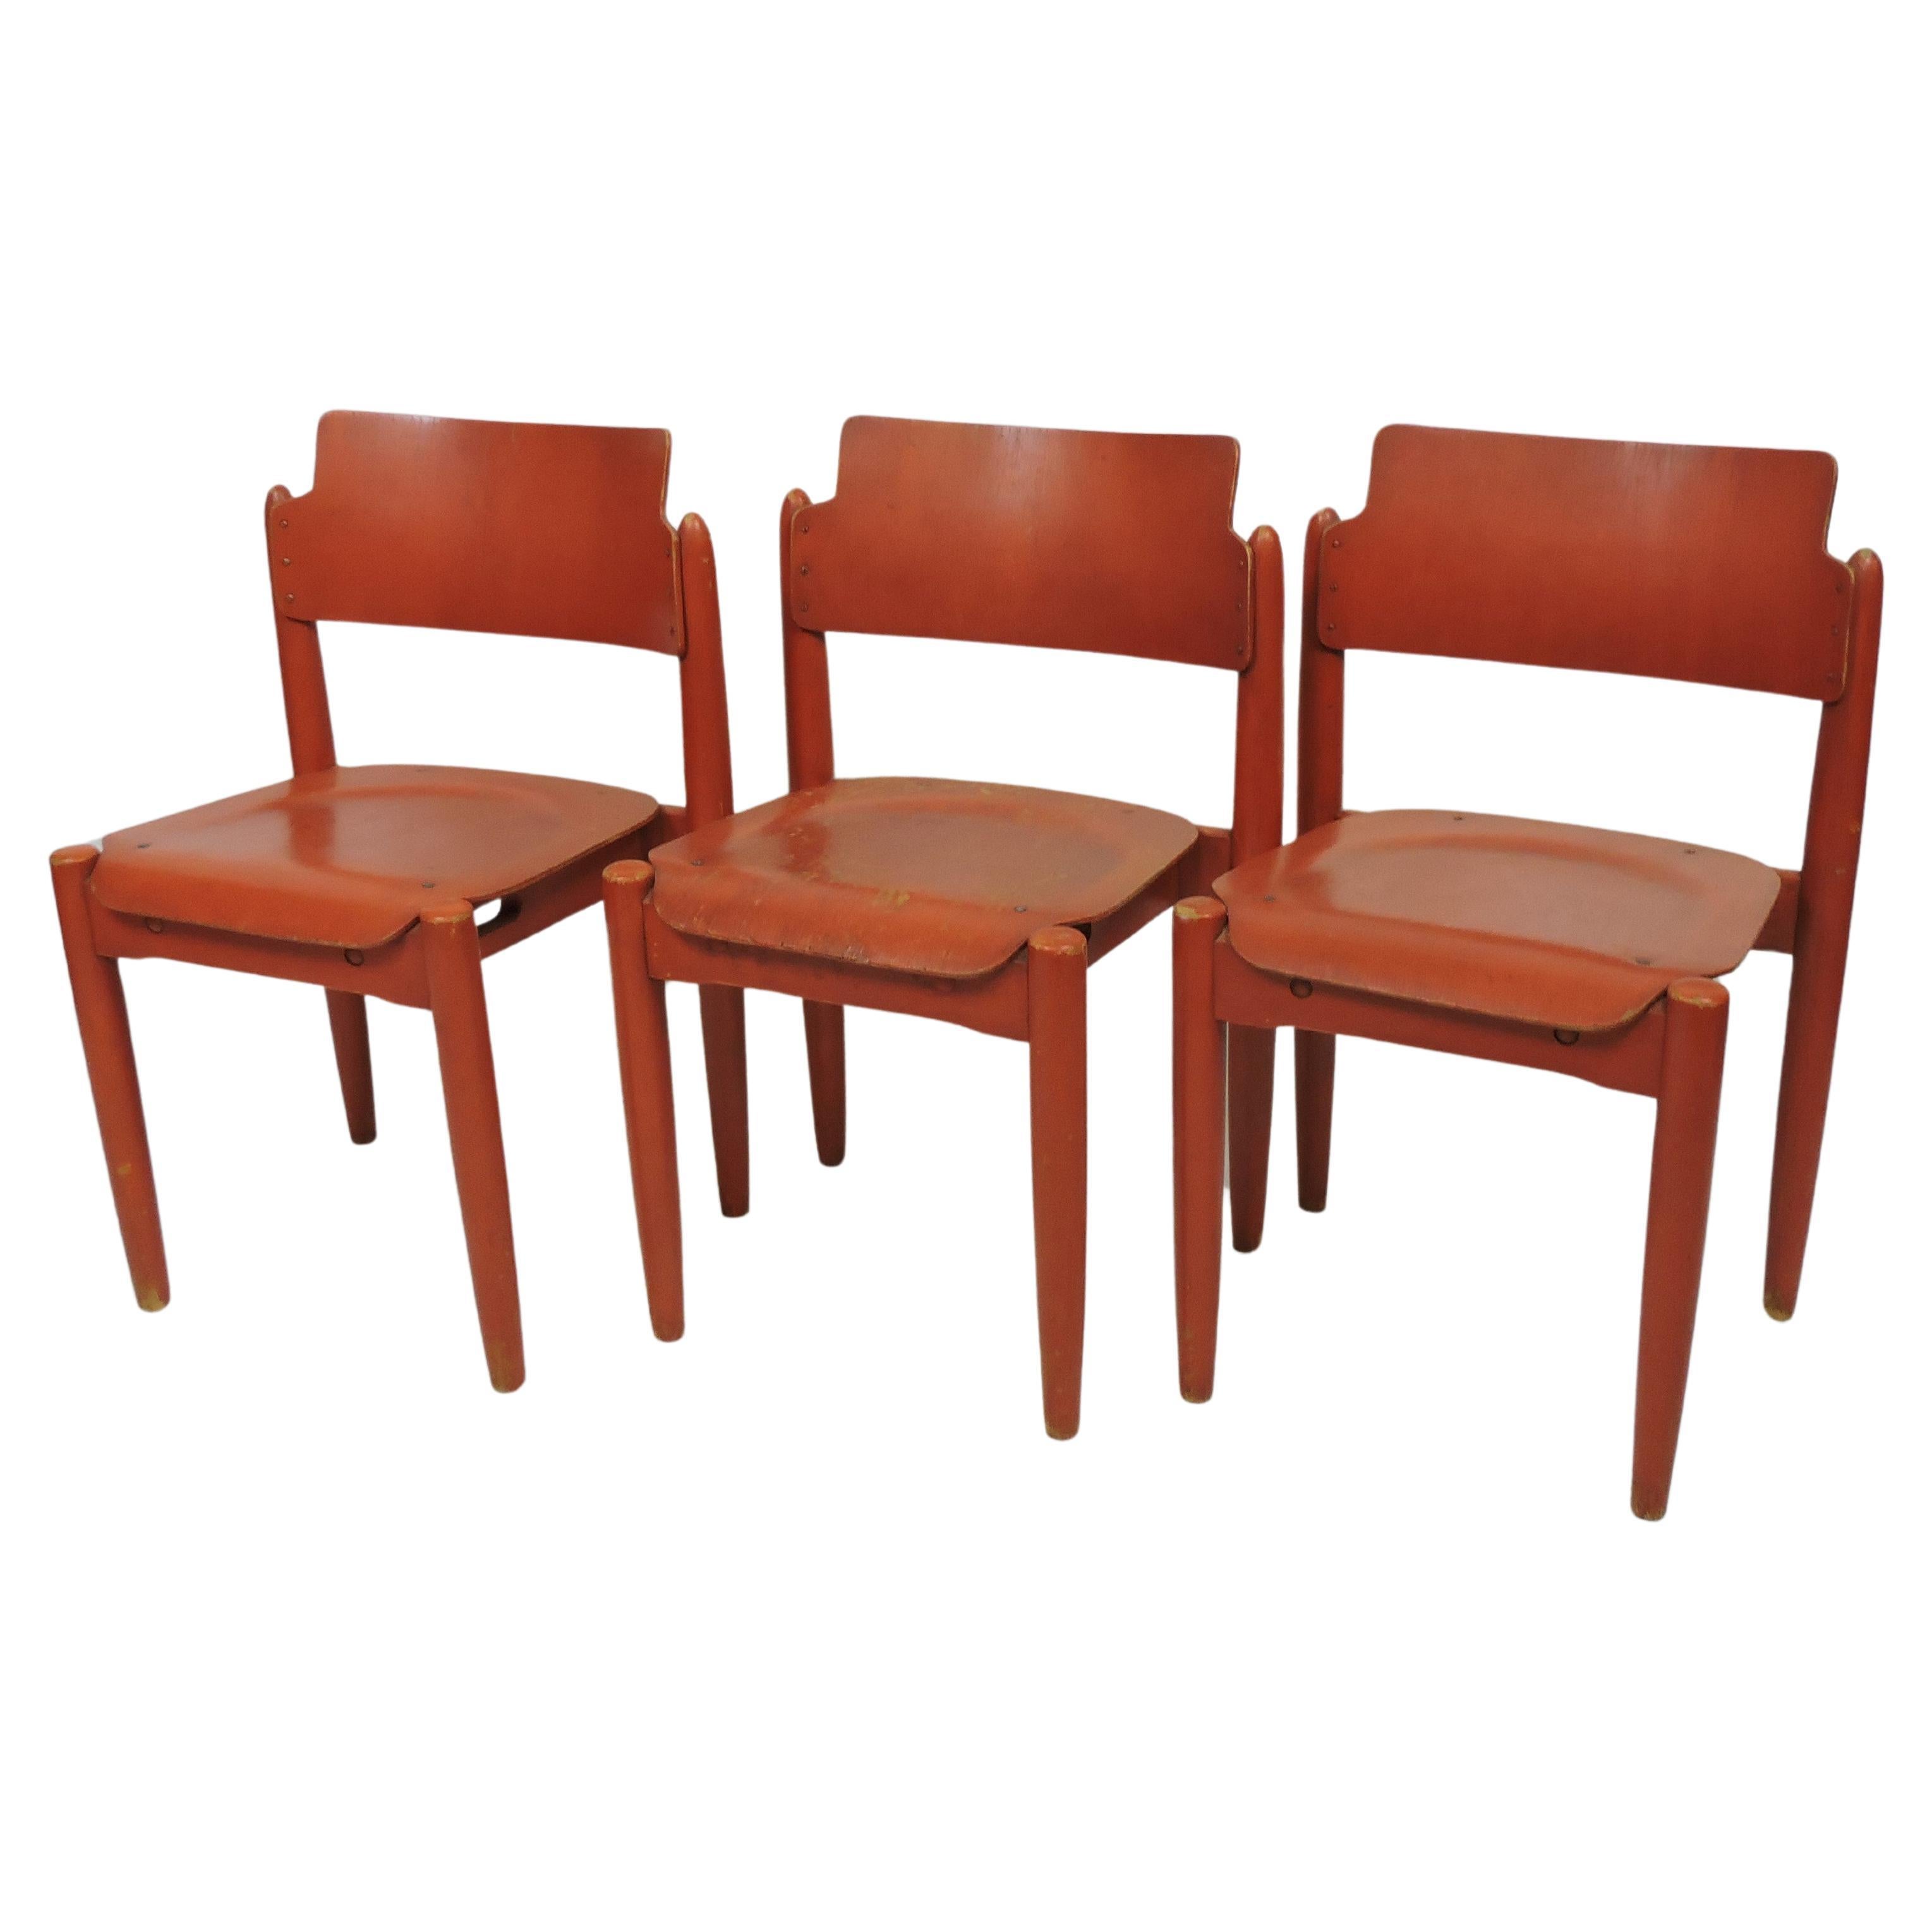  Ilmari Tapiovaara ensemble de 3 chaises Wilman empilables rares scandinaves modernes en vente